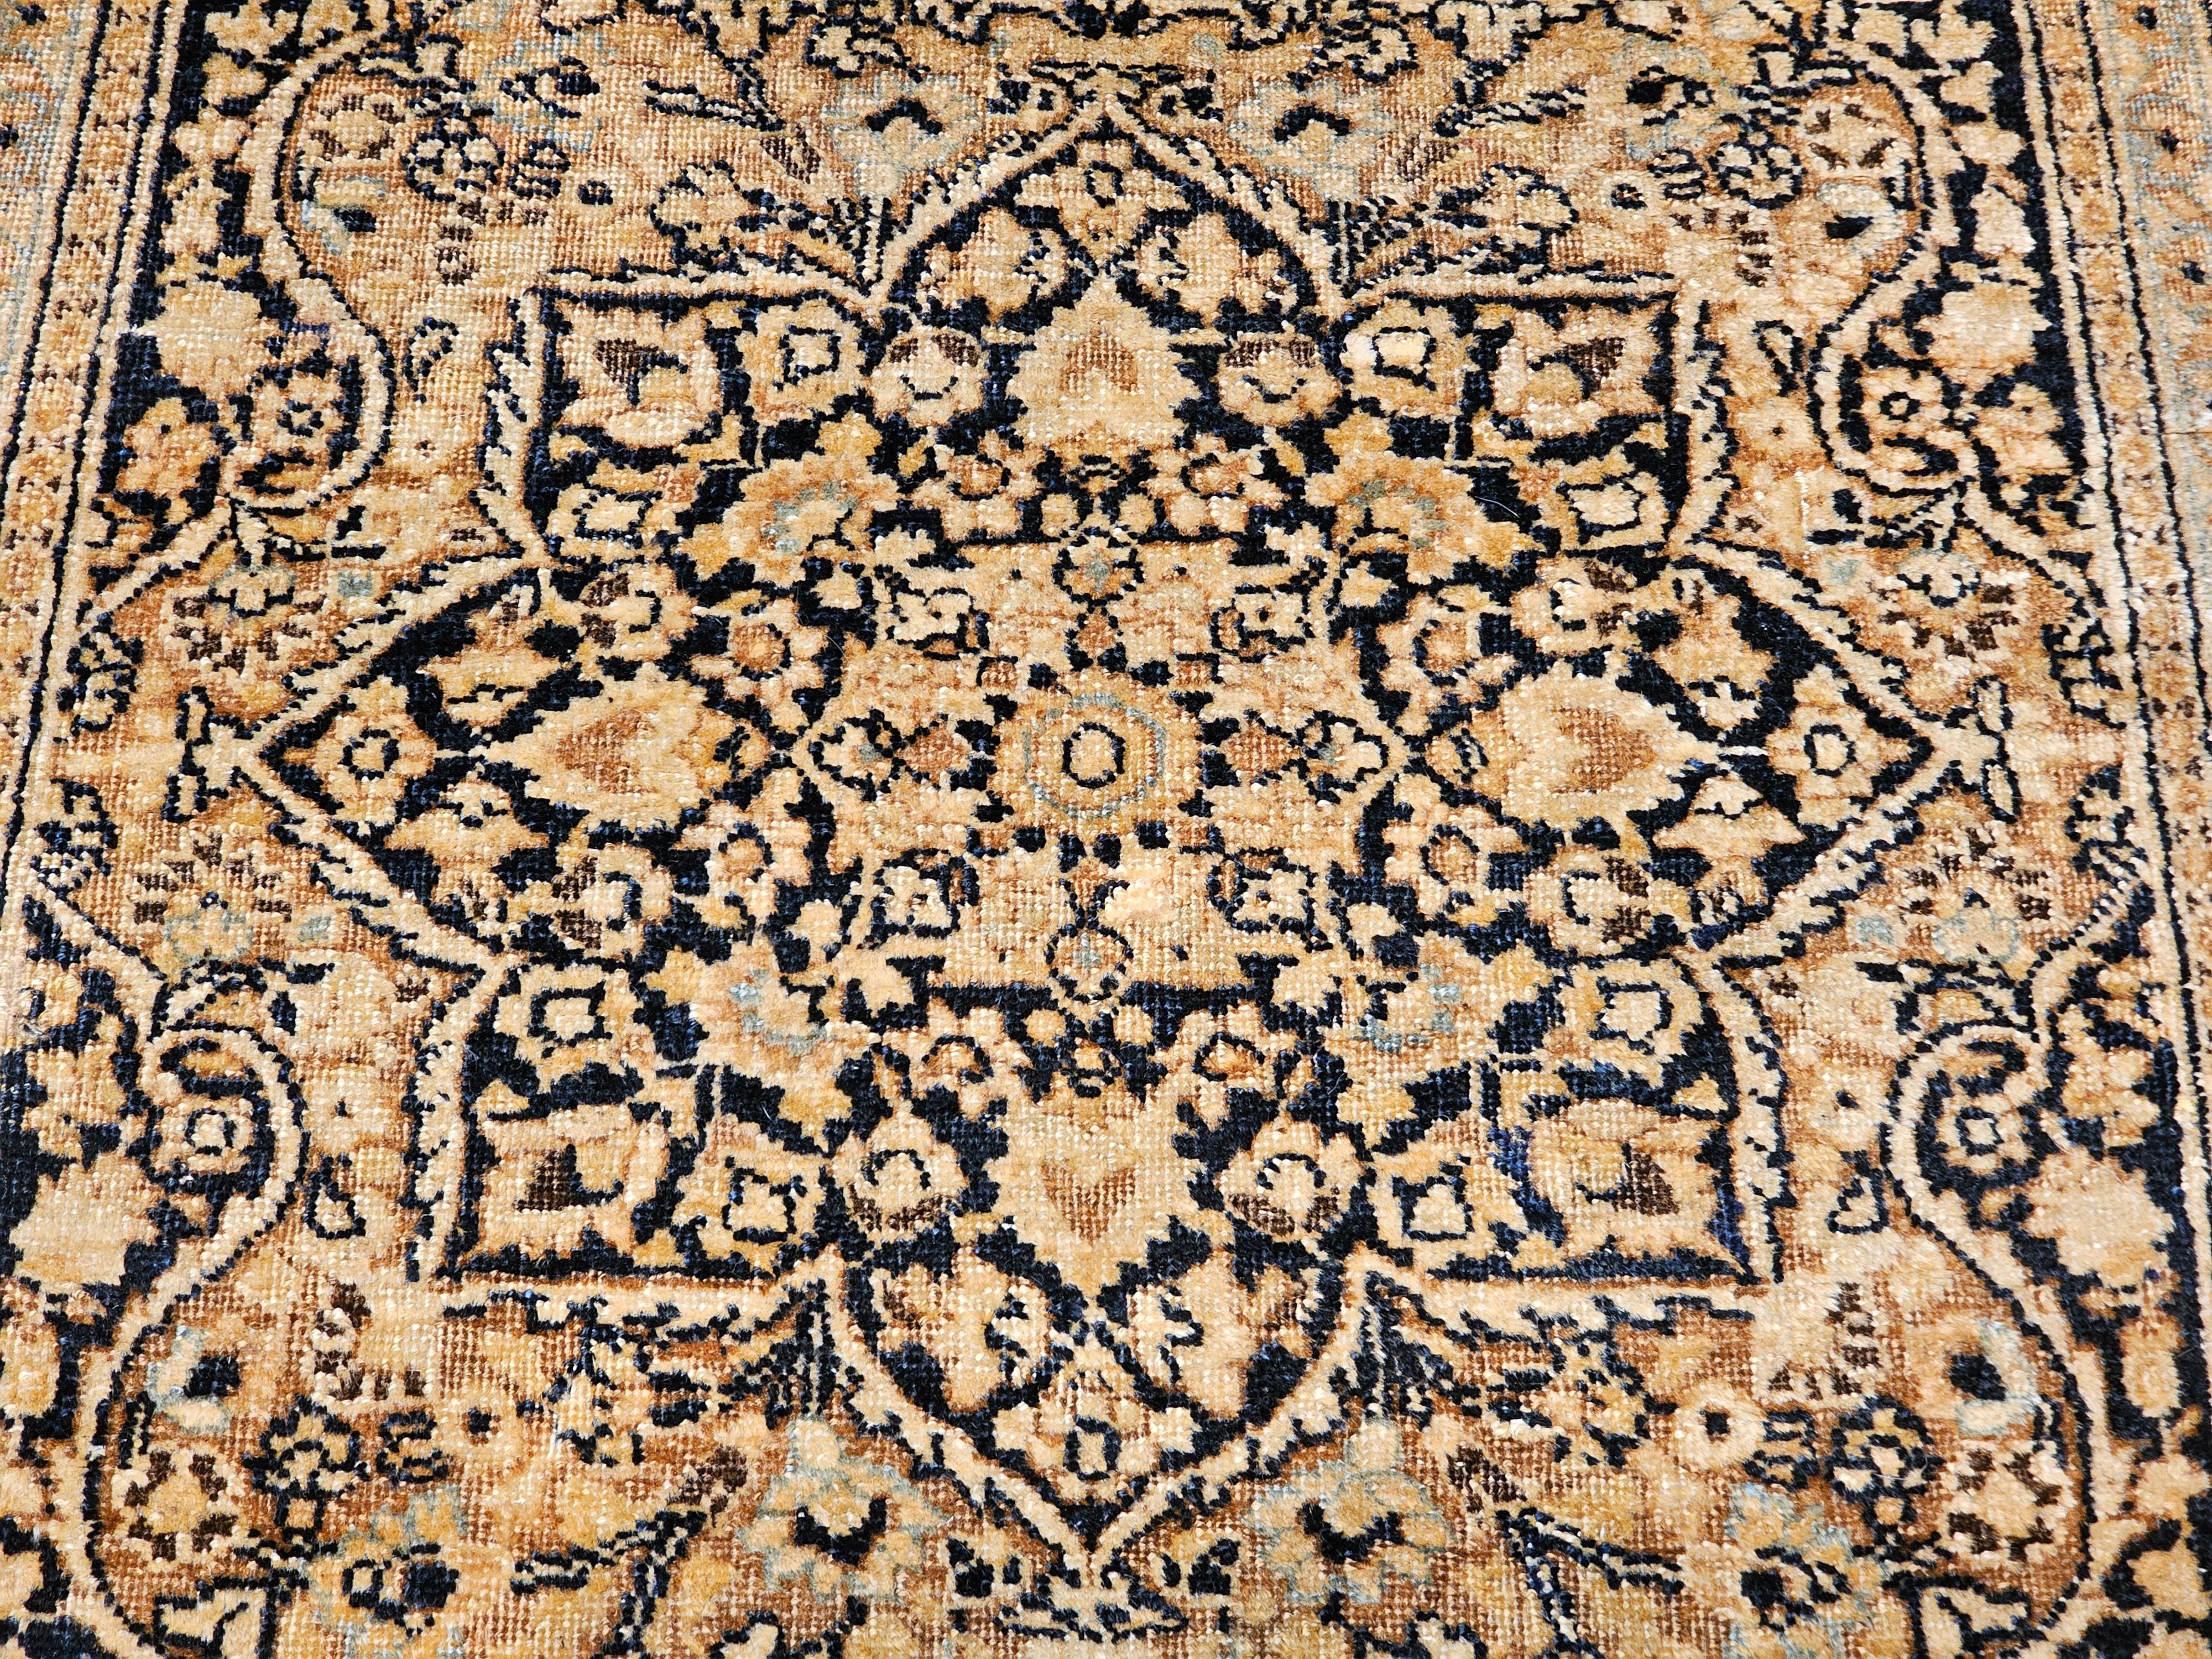 Vintage Persian Tabriz in Allover Floral Pattern in Dark Navy/Black, Gold, Blue 3